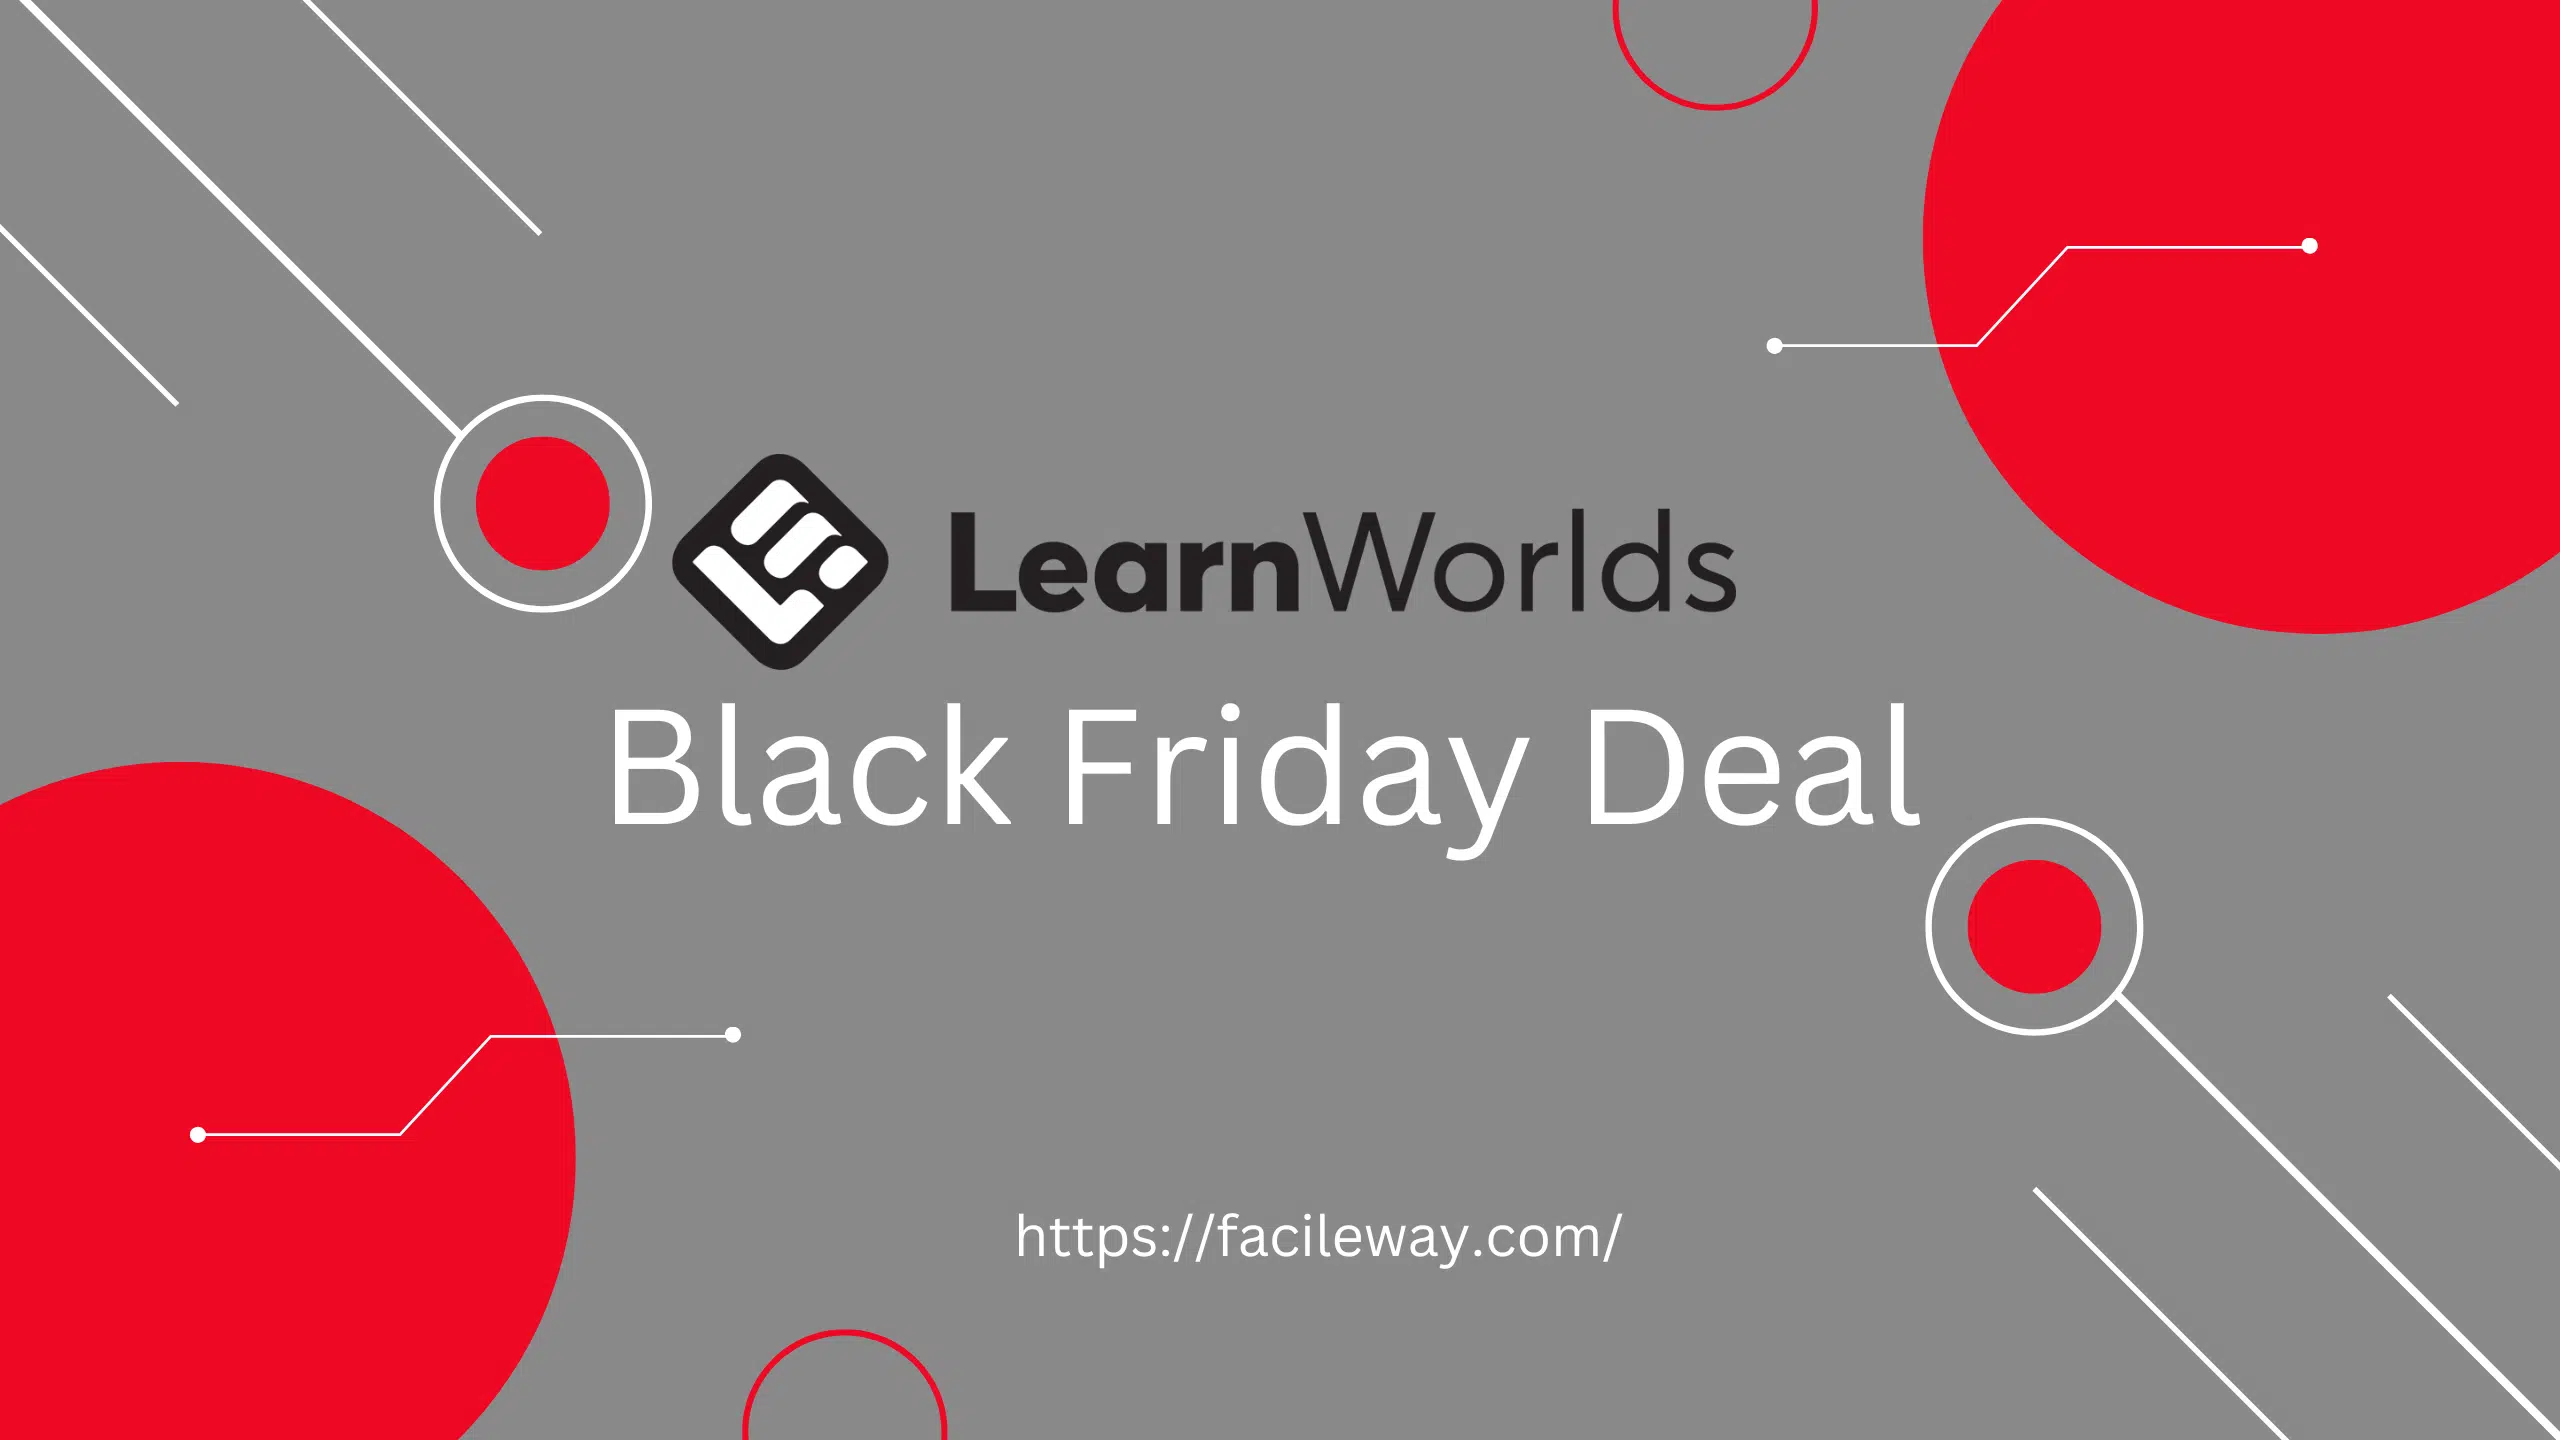 LearnWorlds Black Friday Deal